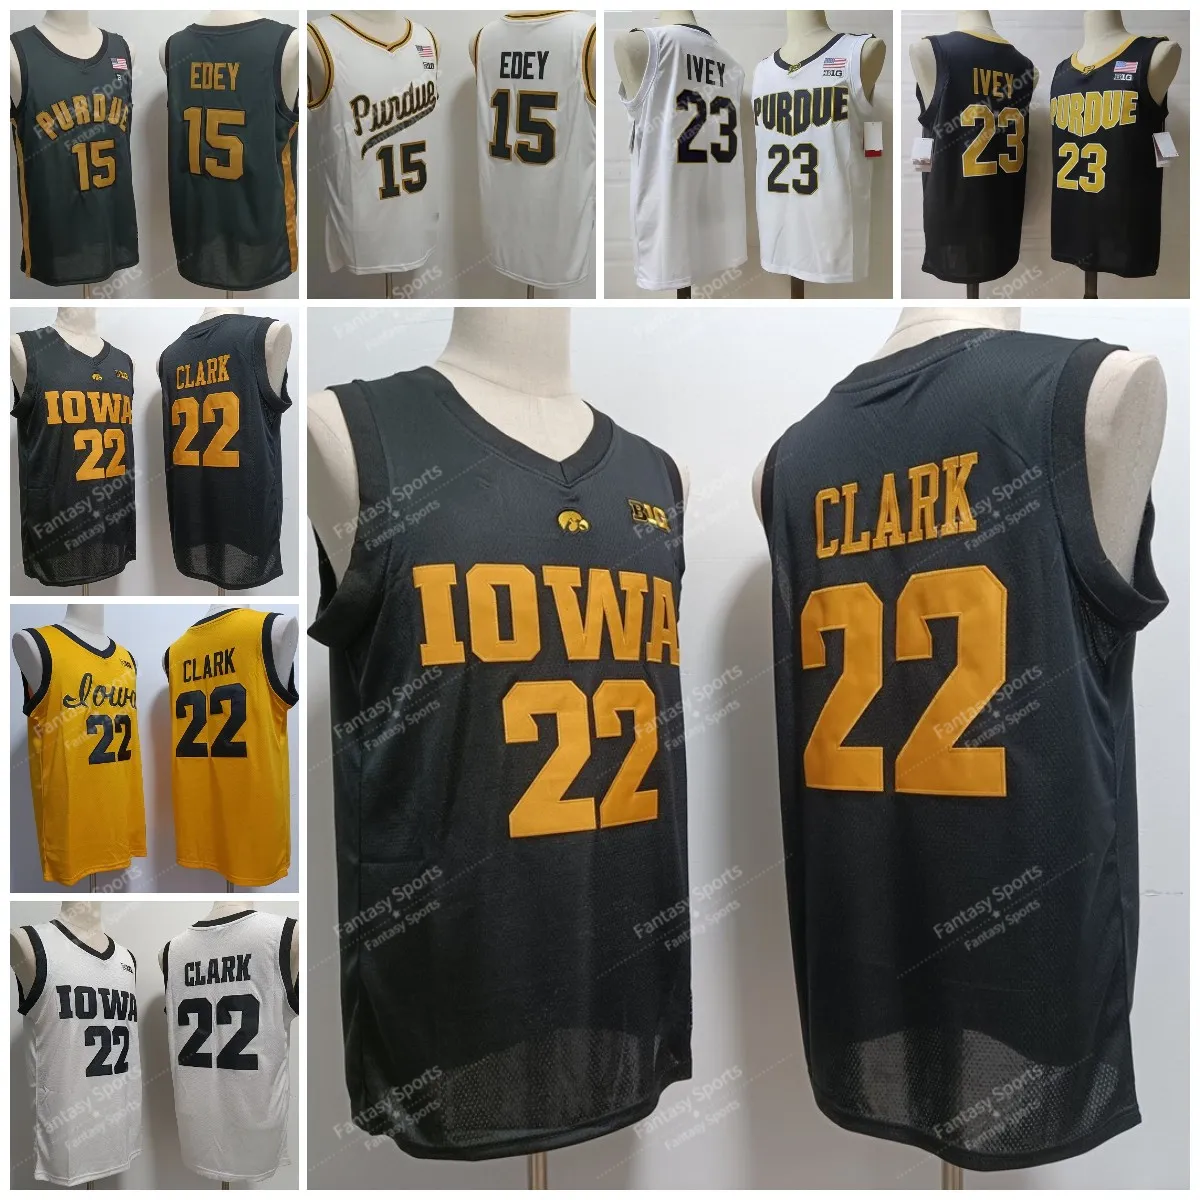 Iowa Hawkeyes 22 Caitlin Clark College Basketball Jersey Purdue Boilermakers 23 Jaden Ivey 15 Zach Edey White Black Ed mens